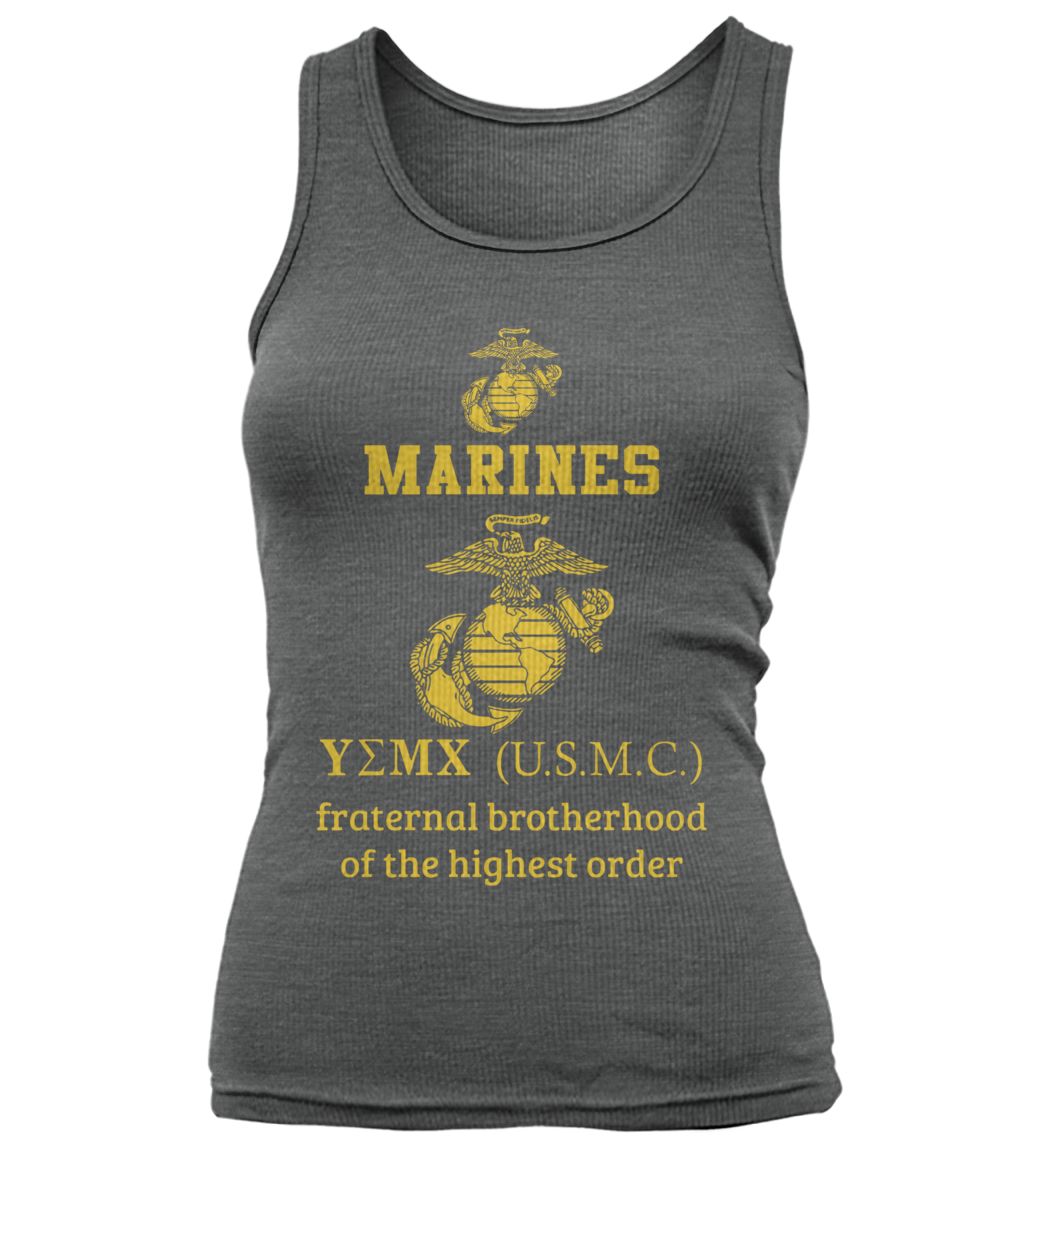 Marine corps fraternal brotherhood of the highest order women's tank top